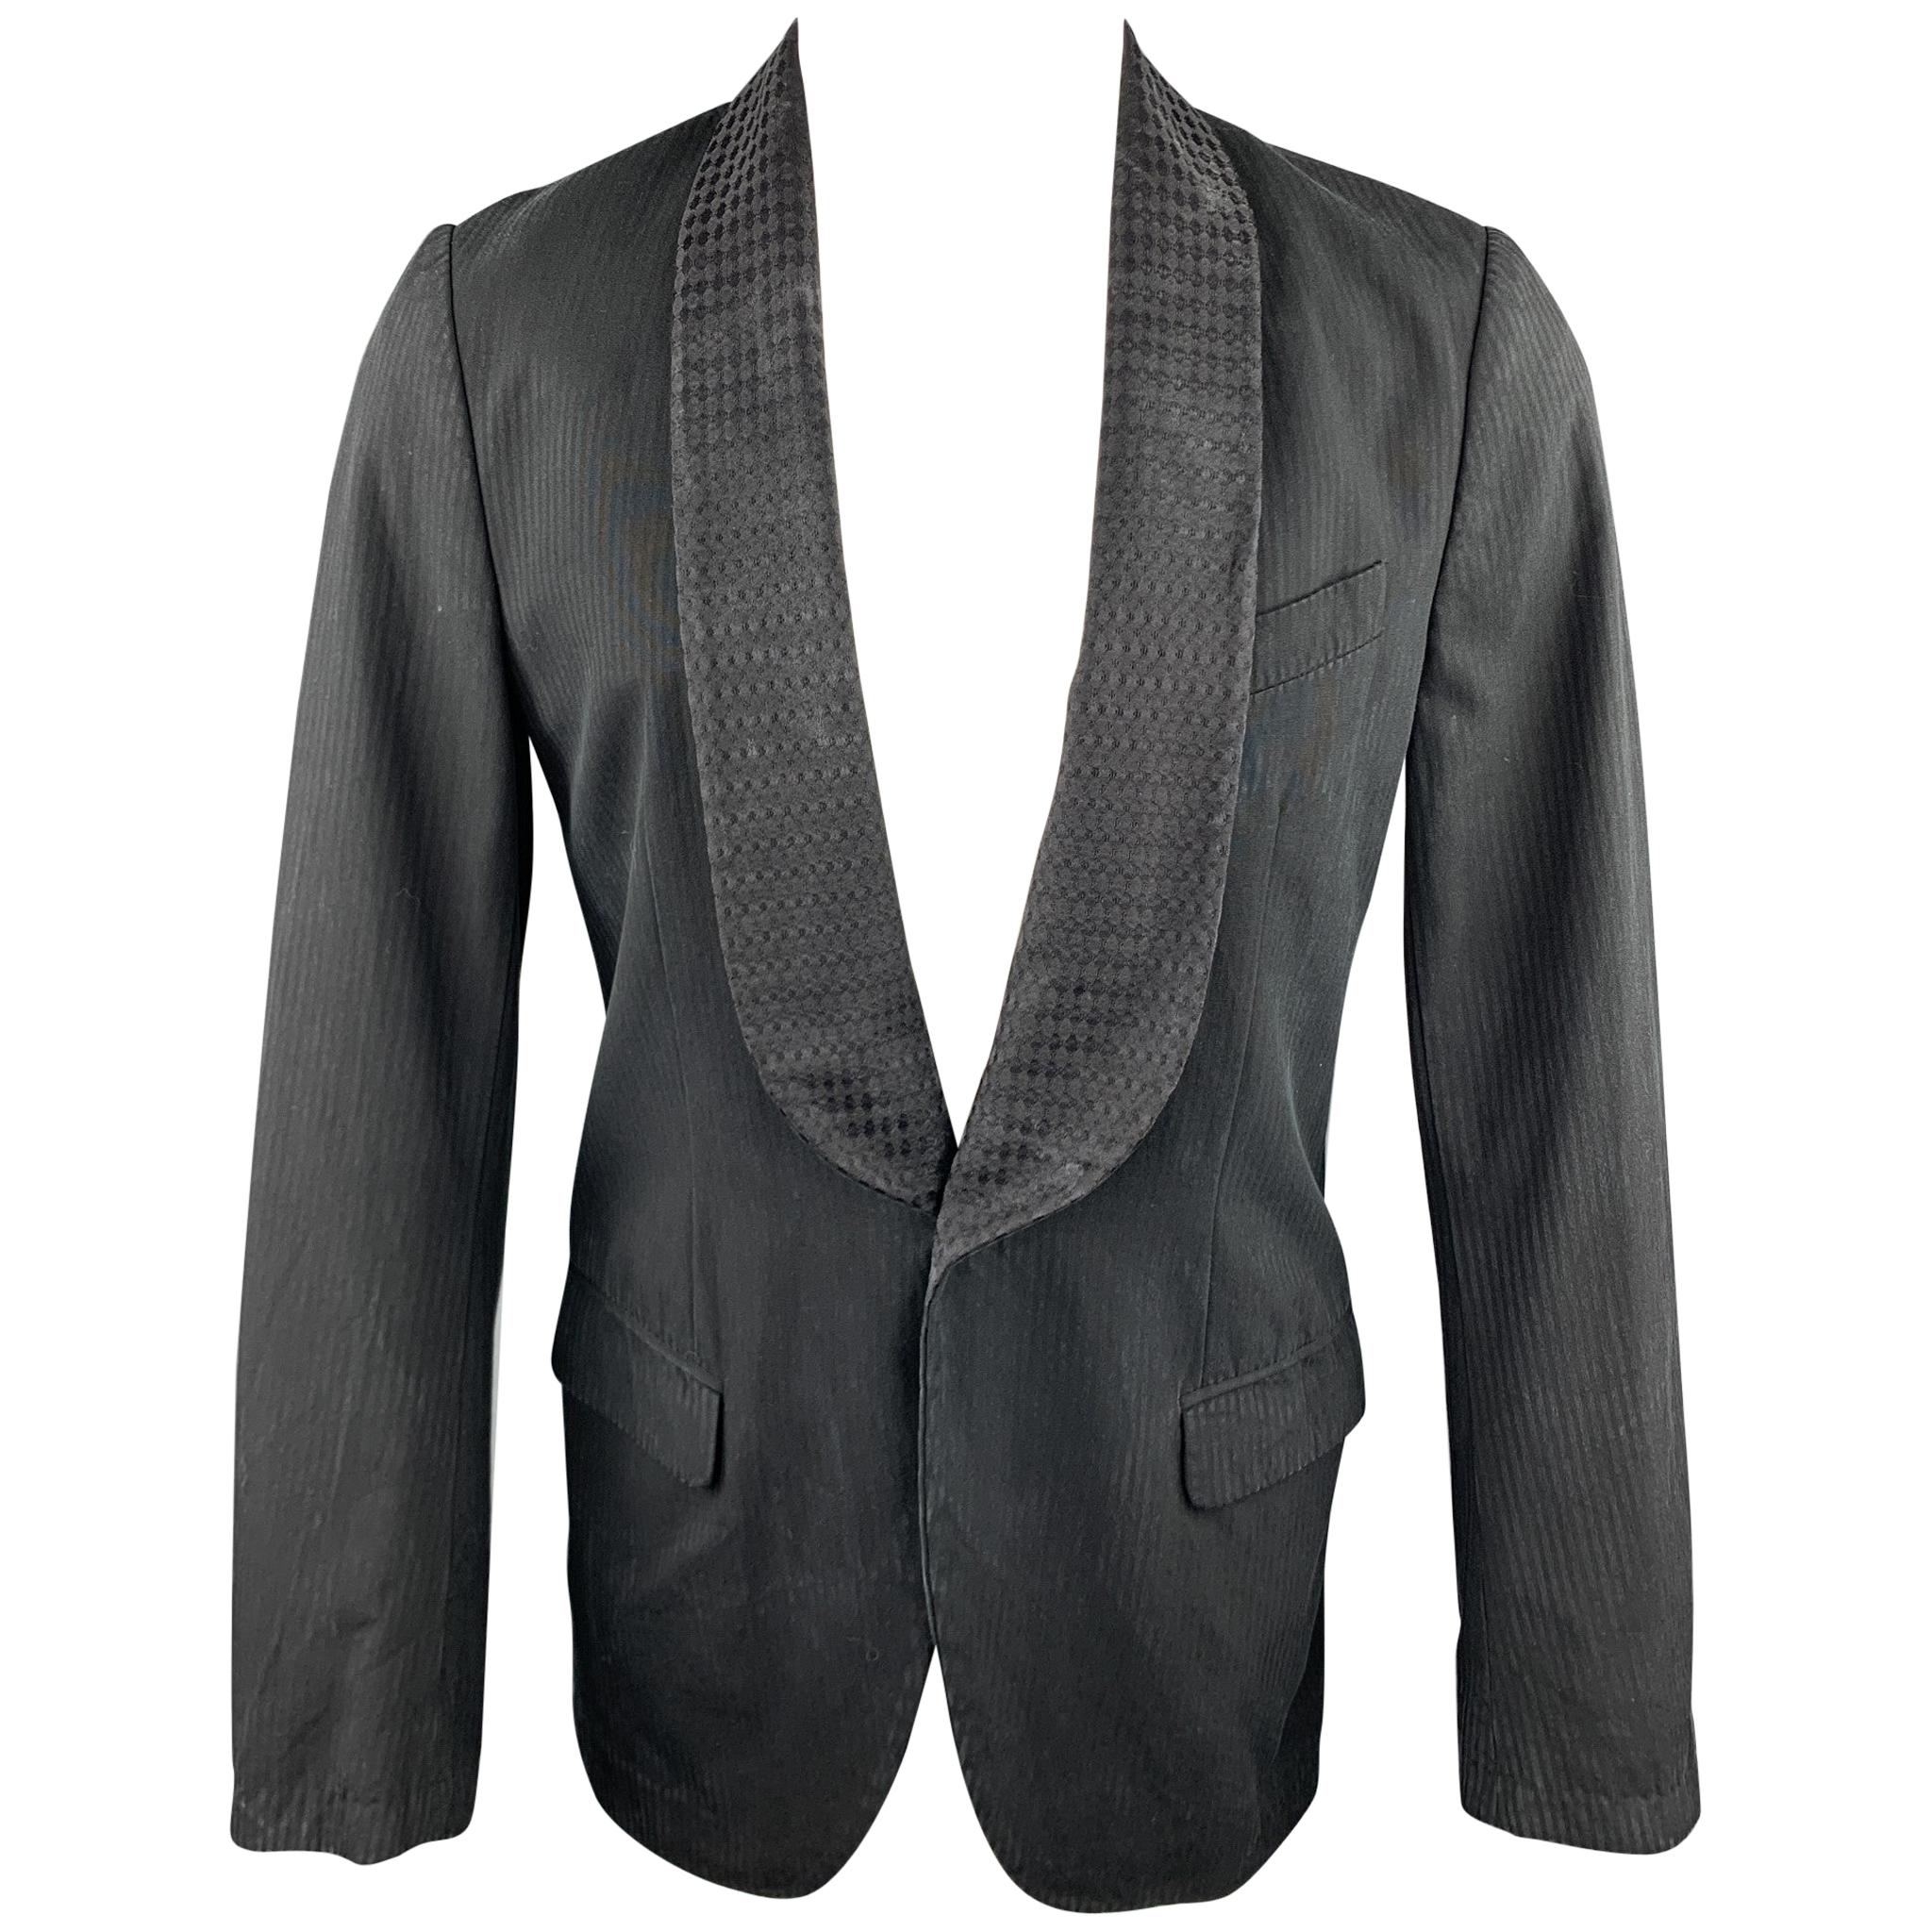 DRIES VAN NOTEN Size 36 Black on Black Stripe Cotton / Rayon Sport Coat Jacket